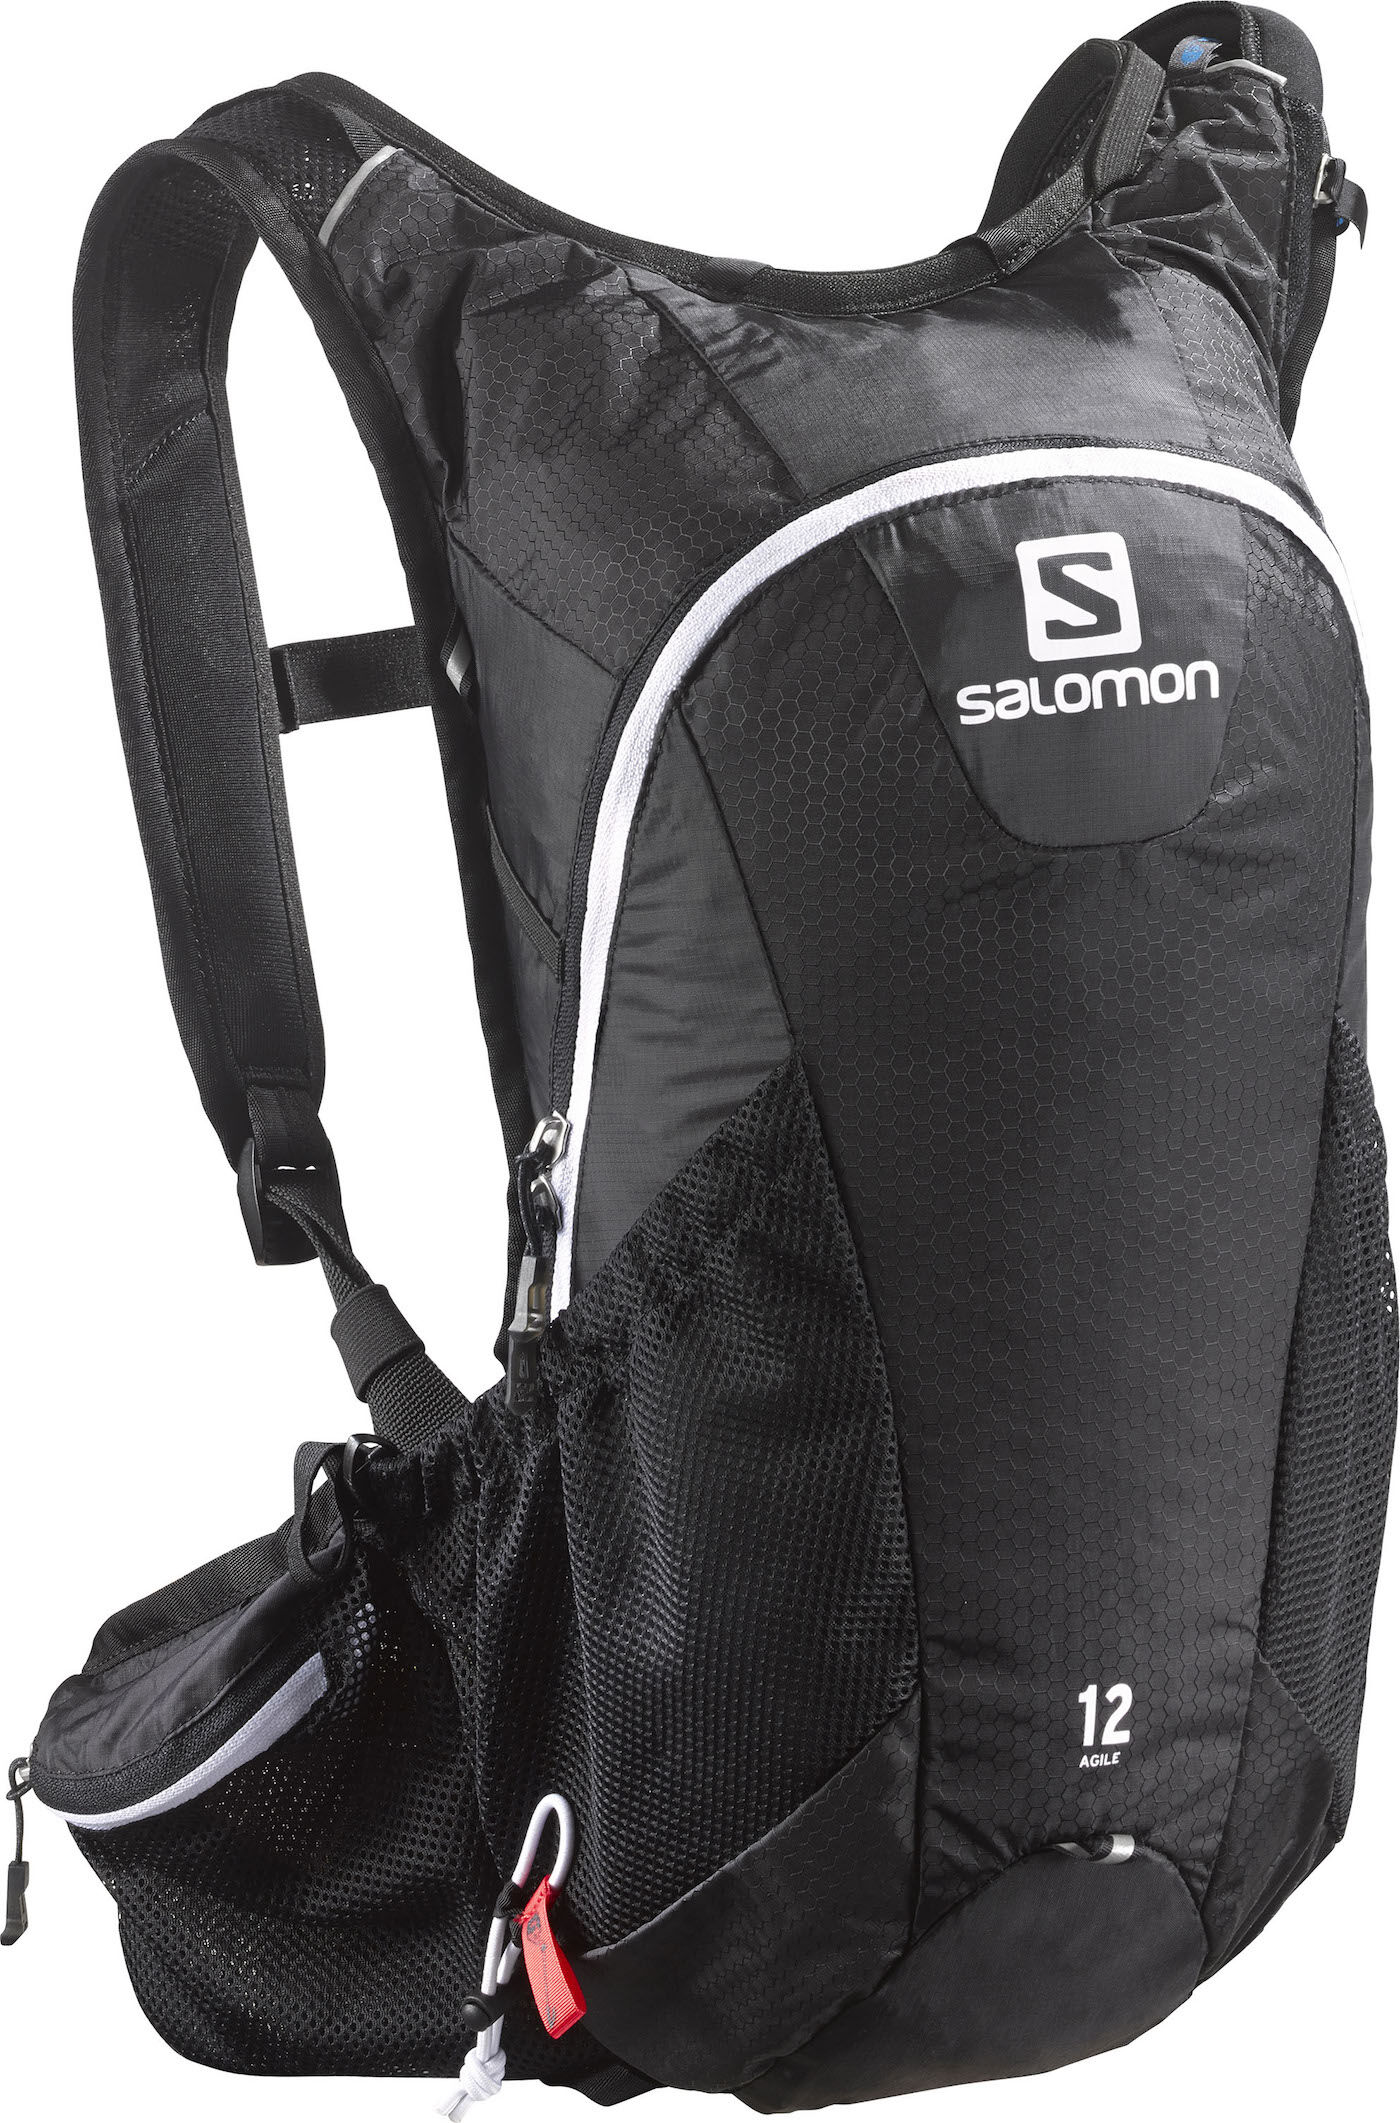 Salomon - Agile 12 Set - Hydratation pack